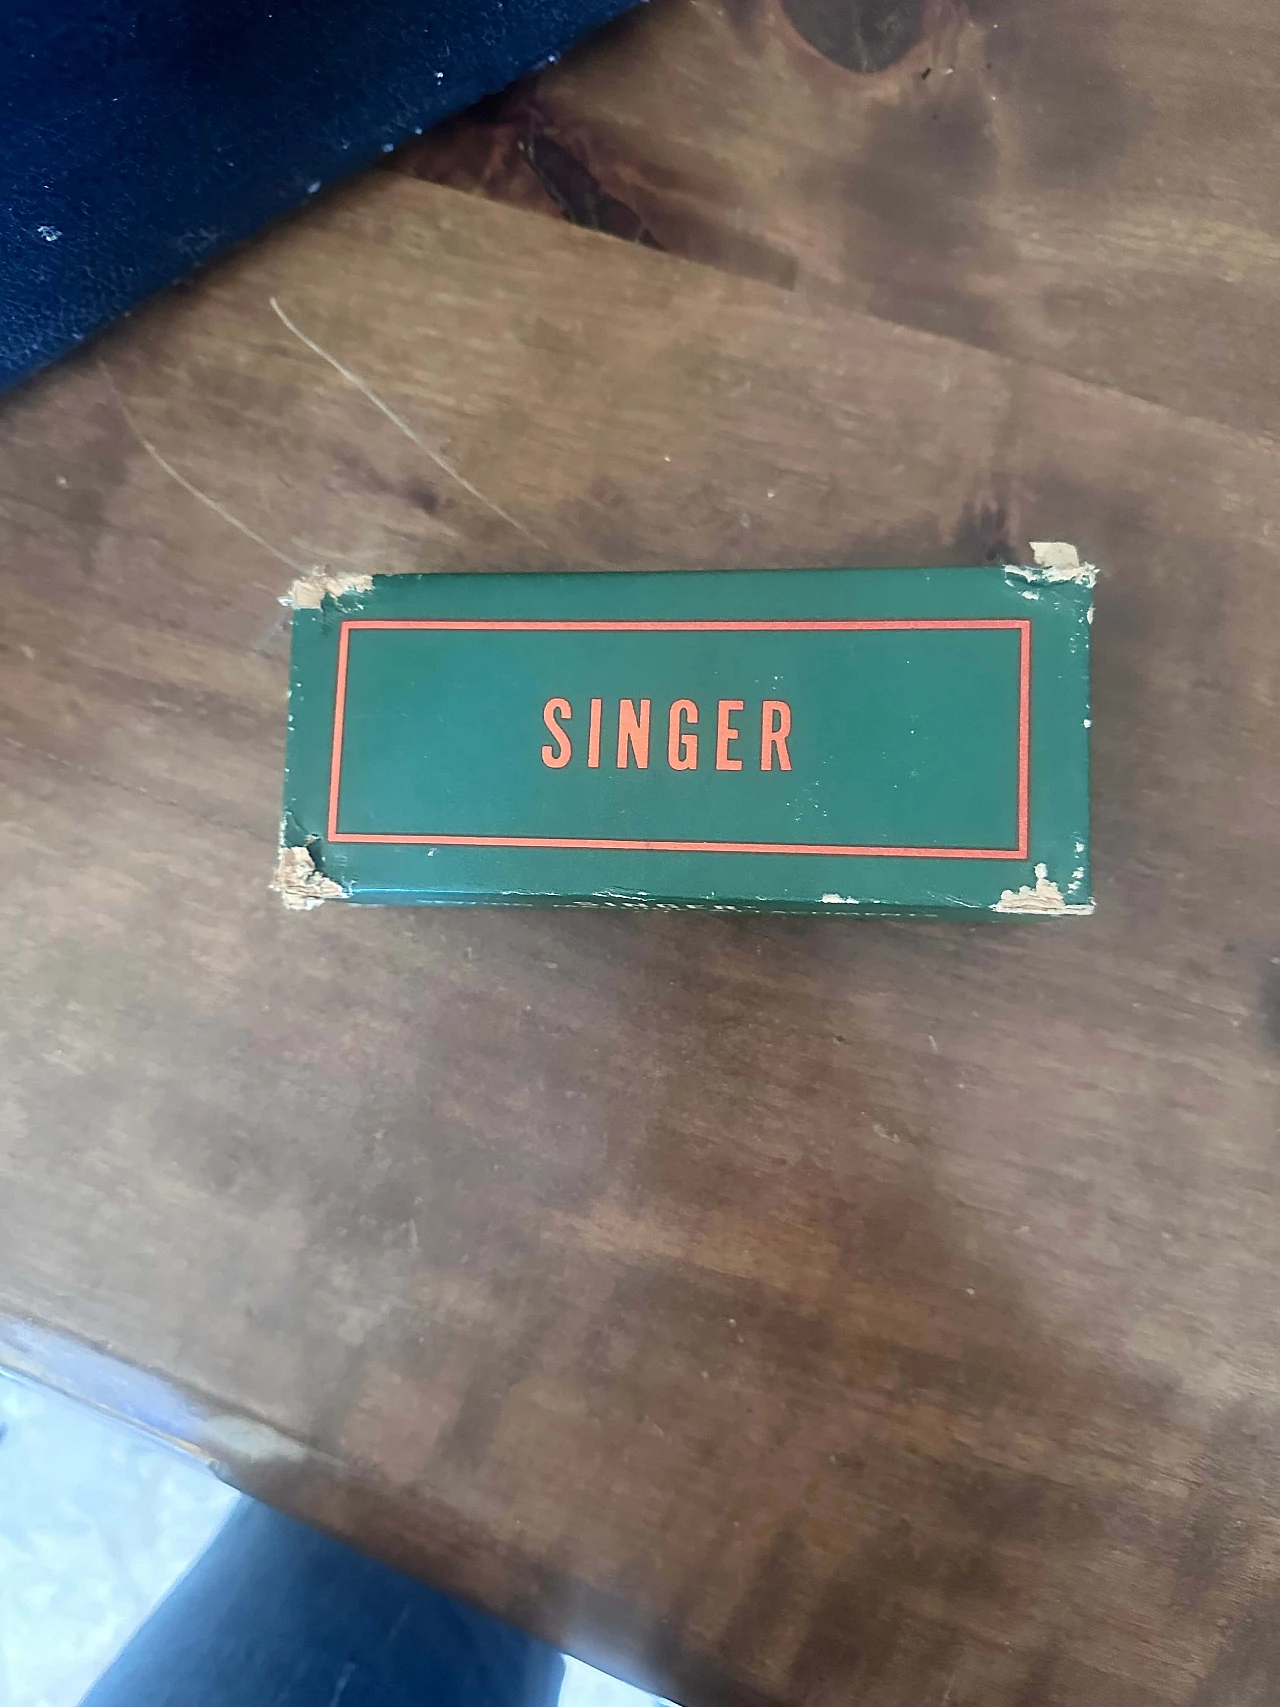 Singer 221K1 portable sewing machine, 1940s 3